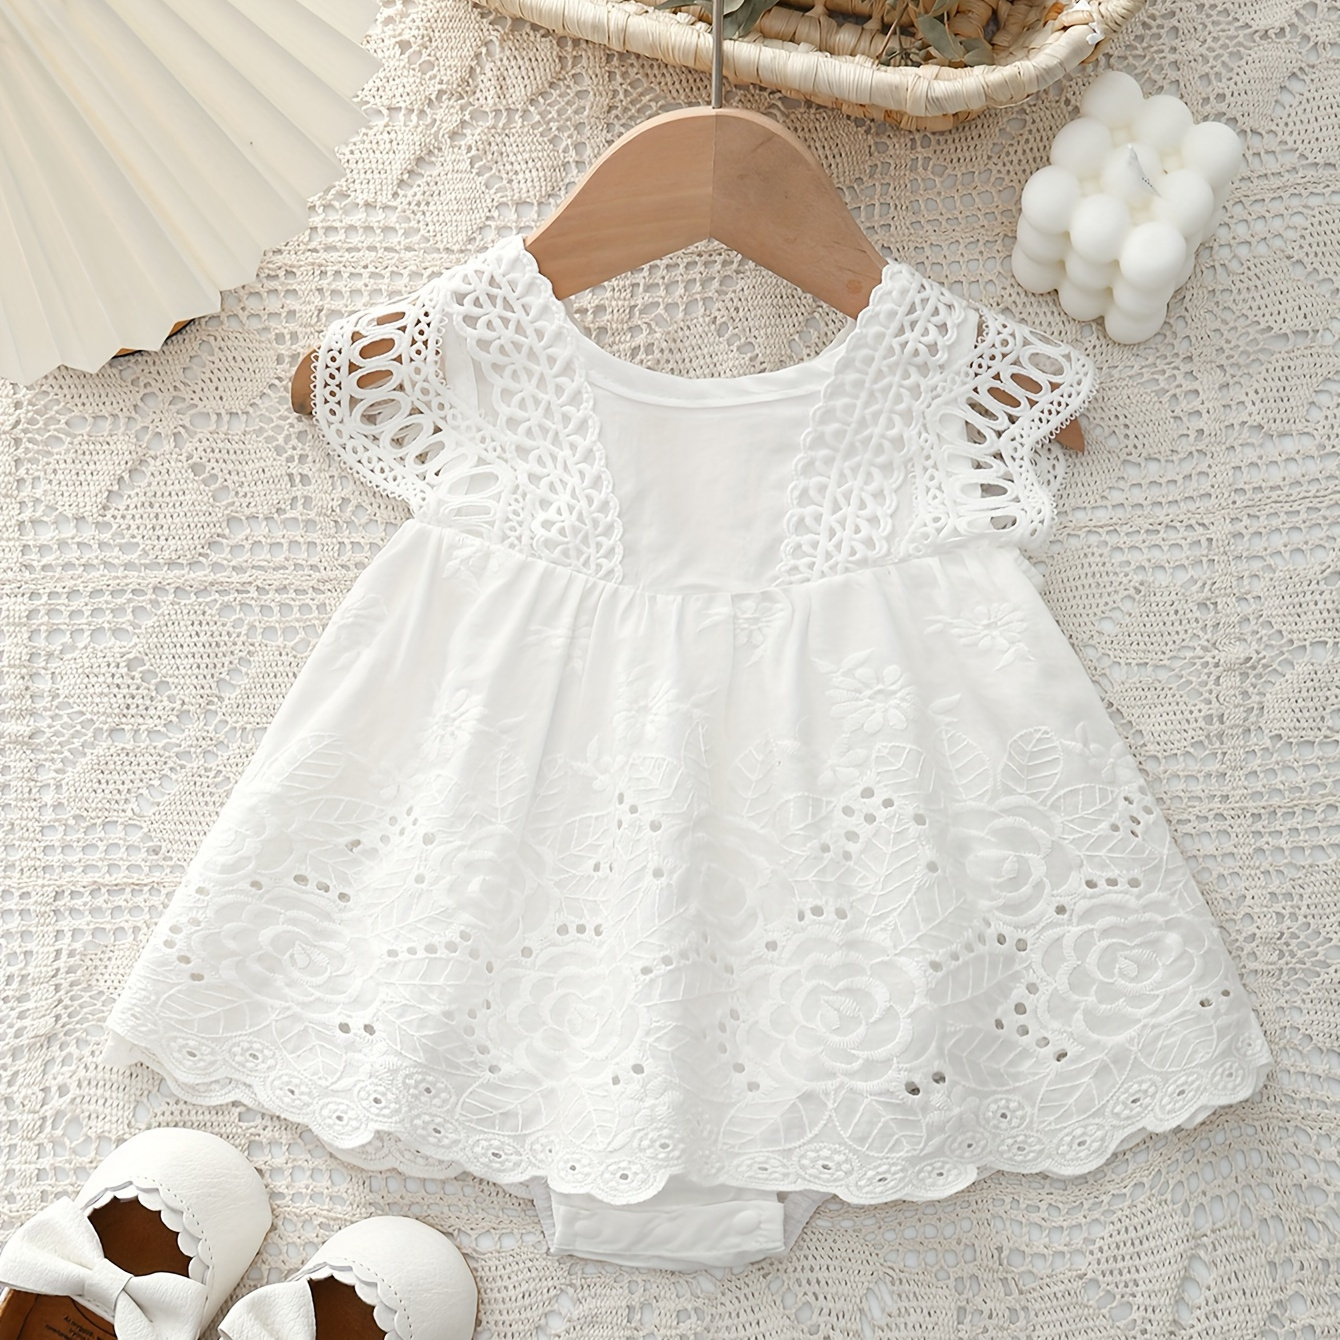 

Baby's Elegant Flower Embroidered Cotton Dress, Lace Cap Sleeve Dress, Infant & Toddler Girl's Clothing For Christening & Baptism